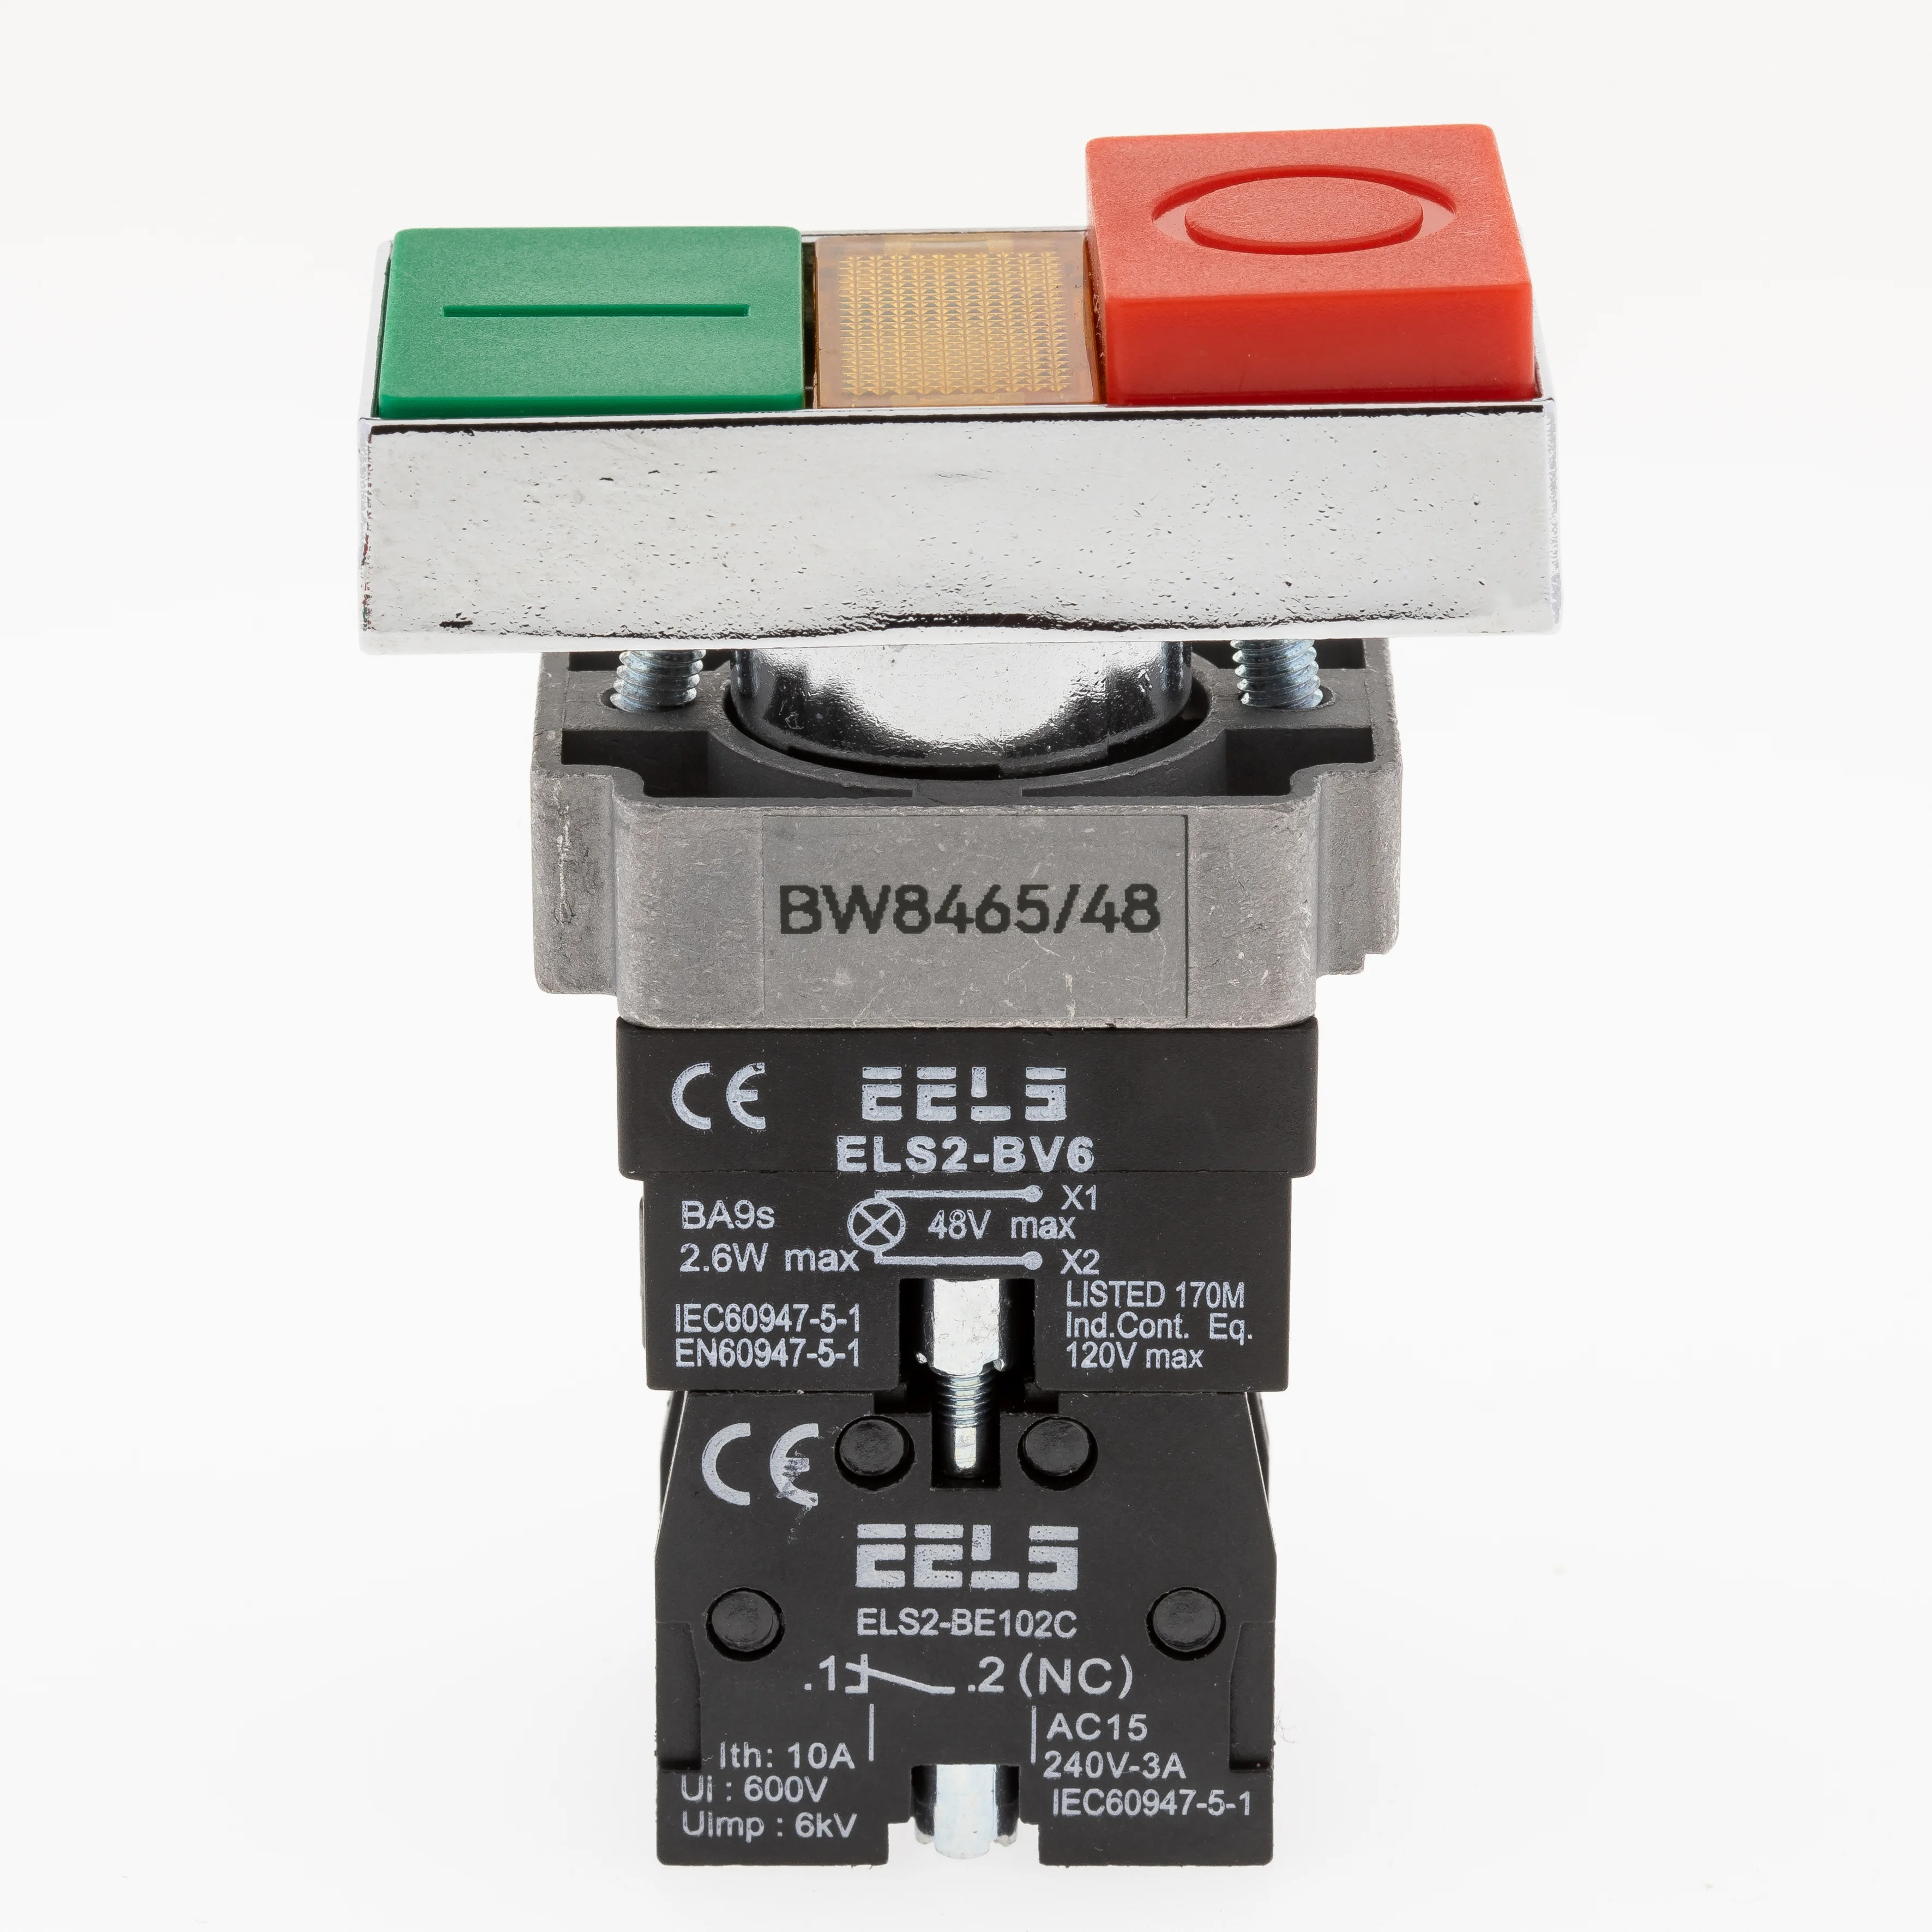 Buton dublu 0-1, rosu-verde cu indicator  luminos prezenta tensiune la 48V DC ELS2-BW8465 1xNO+1xNC, 3A/240V AC